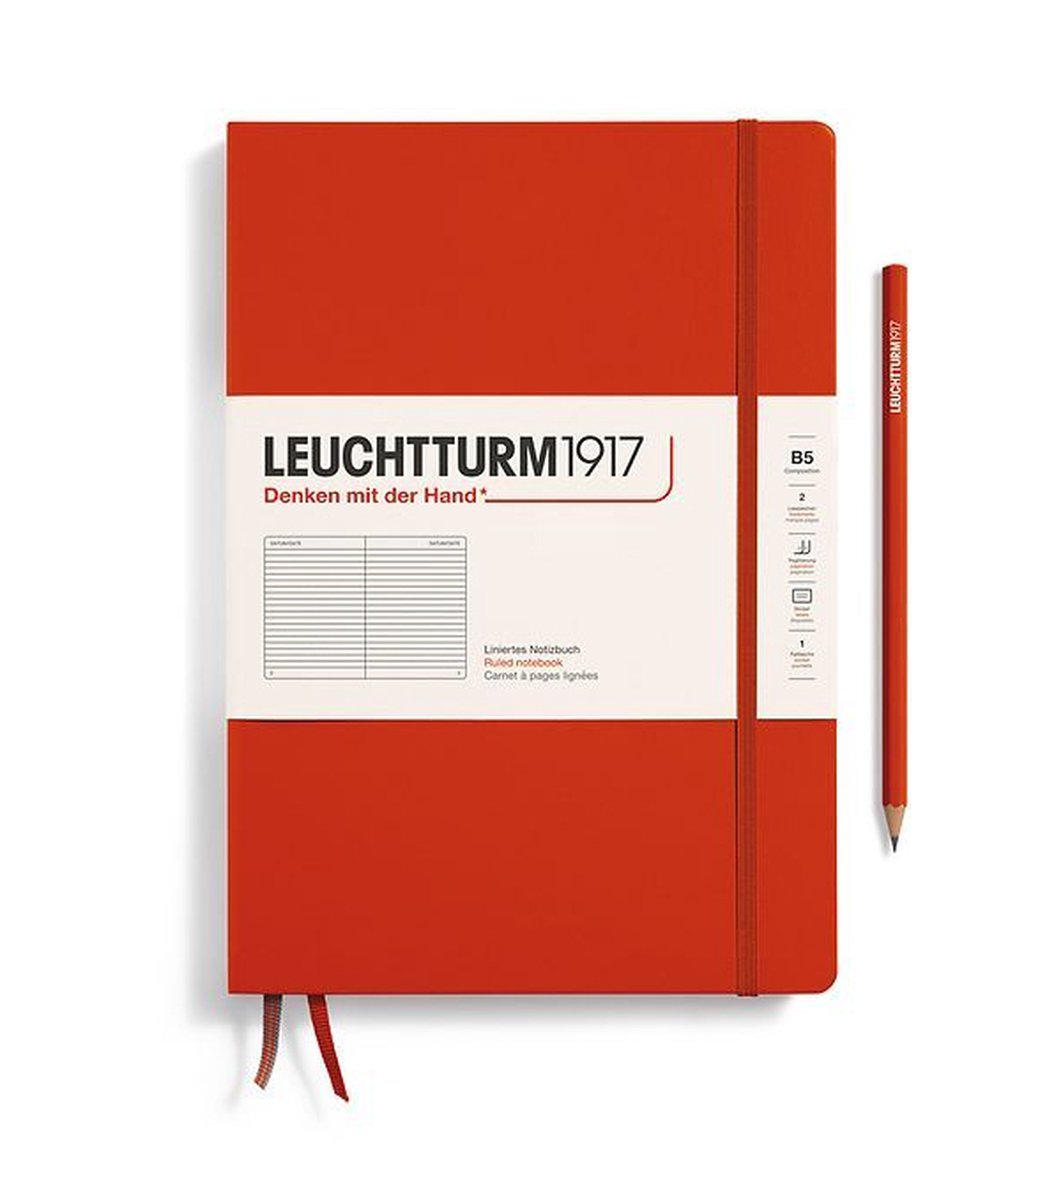 Leuchtturm notitieboek fox red blanco composition hardcover b5 178x254mm